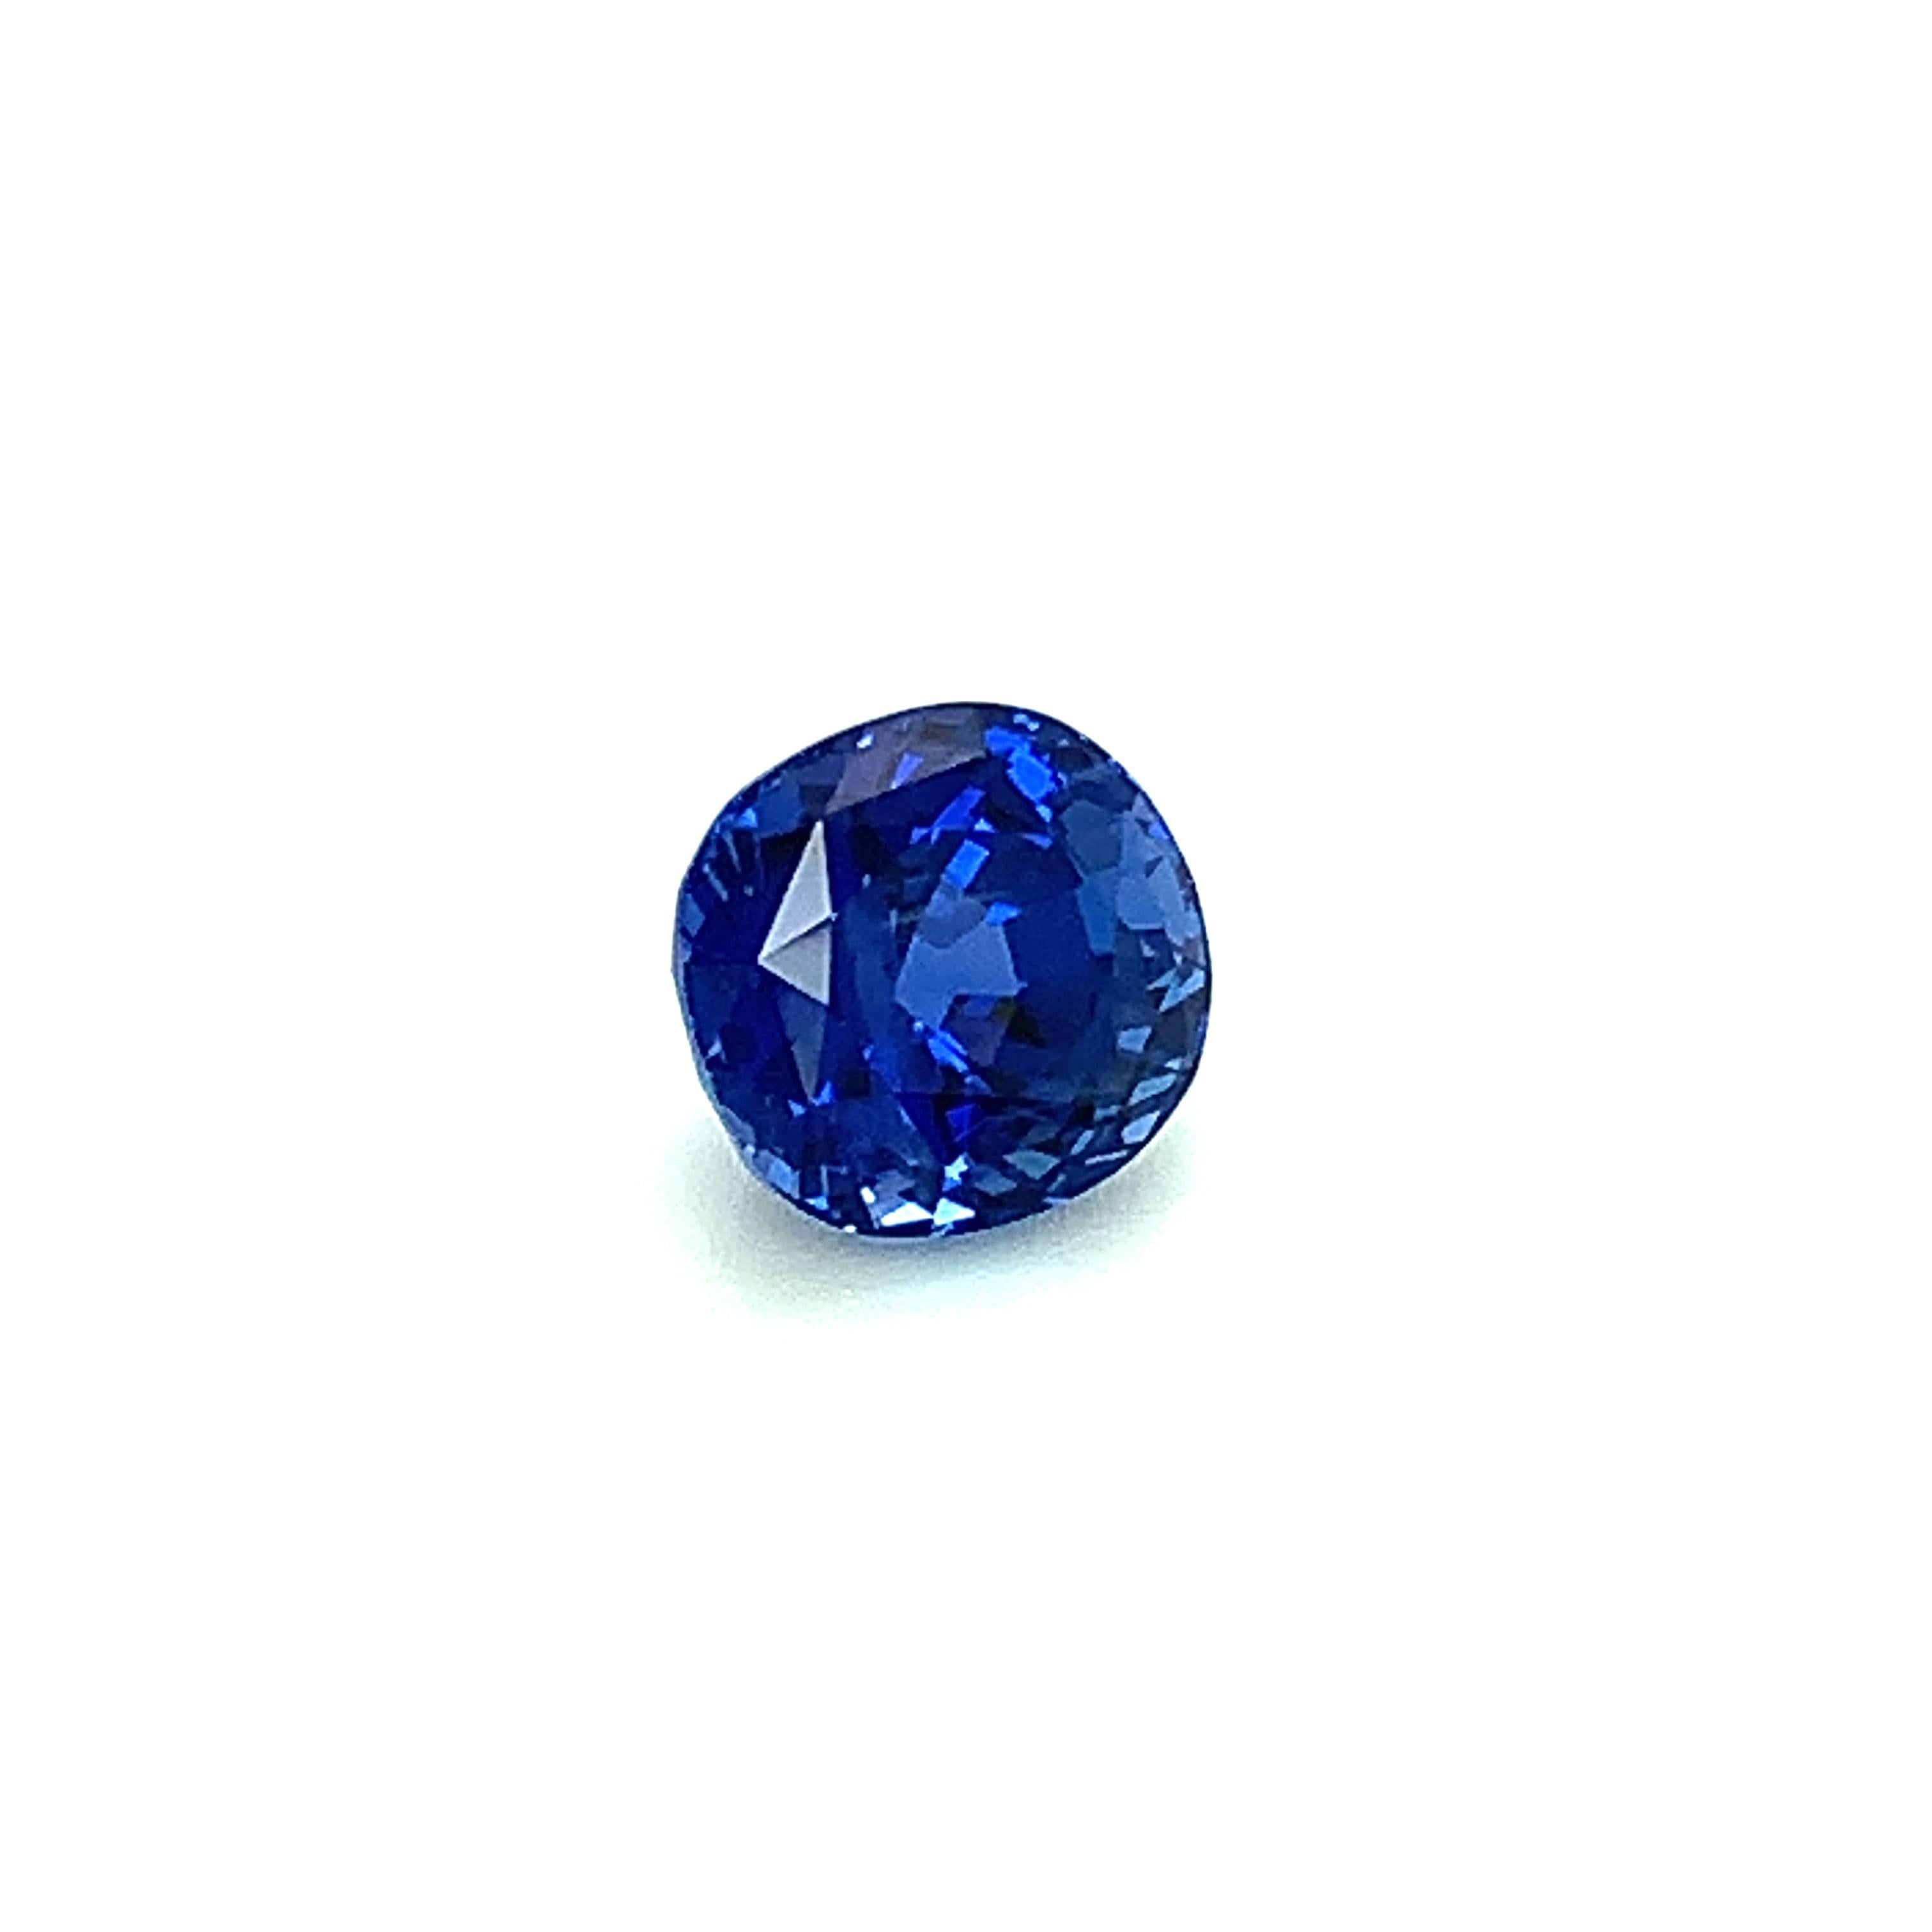 Cushion Cut Unheated 3.32 Carat Ceylon Blue Sapphire, Unset Loose Gemstone, GIA Certified